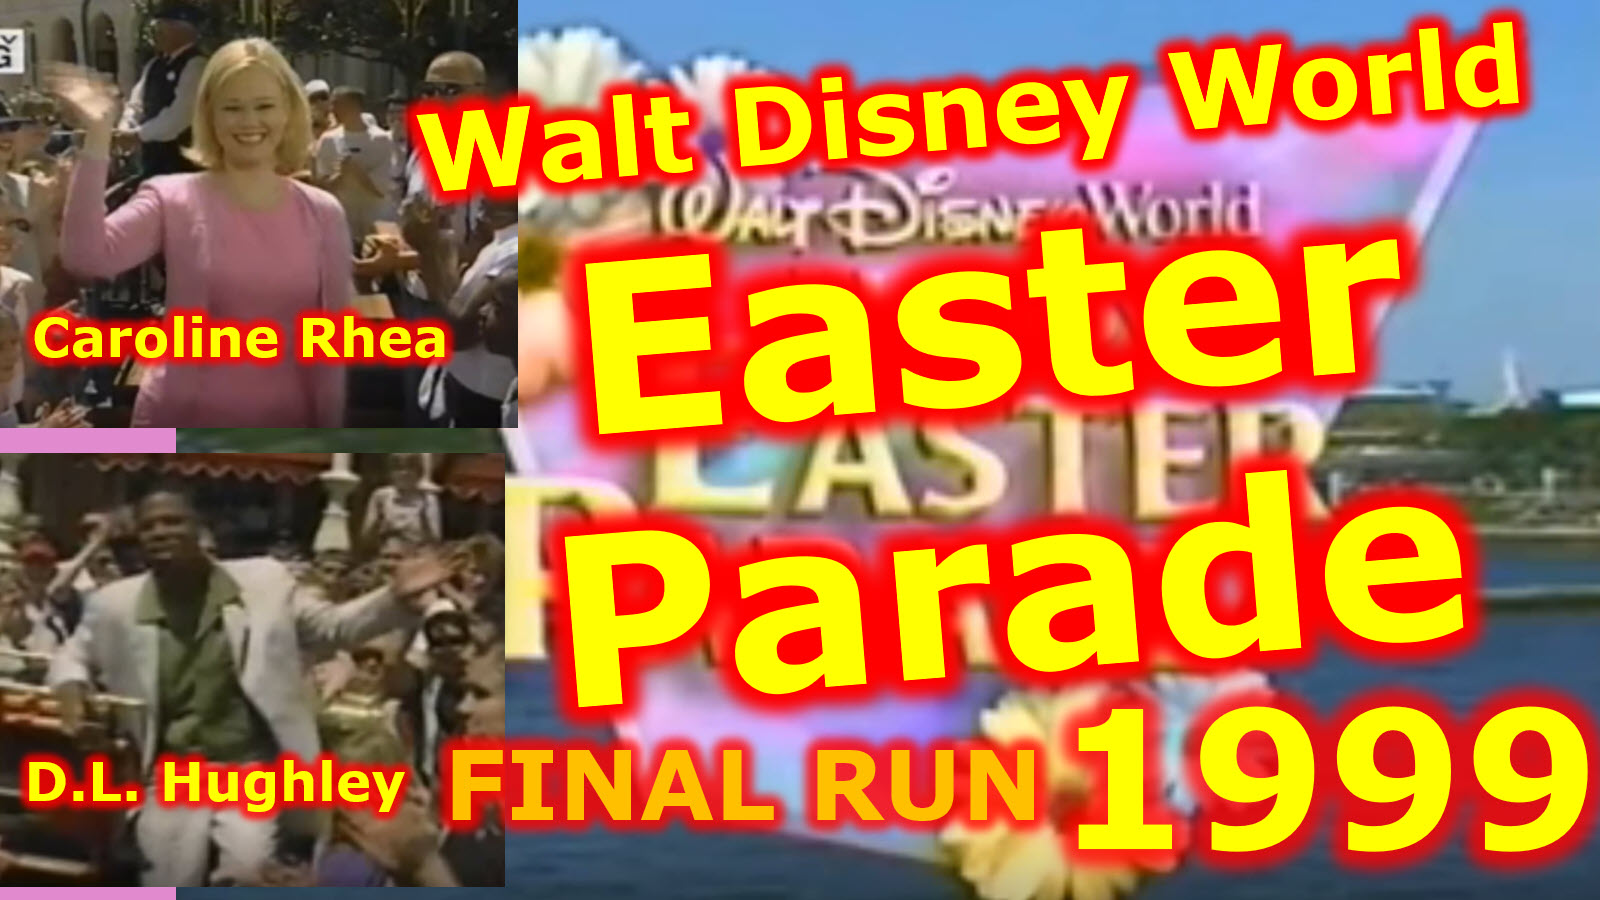 1999 Walt Disney World Happy Easter Parade